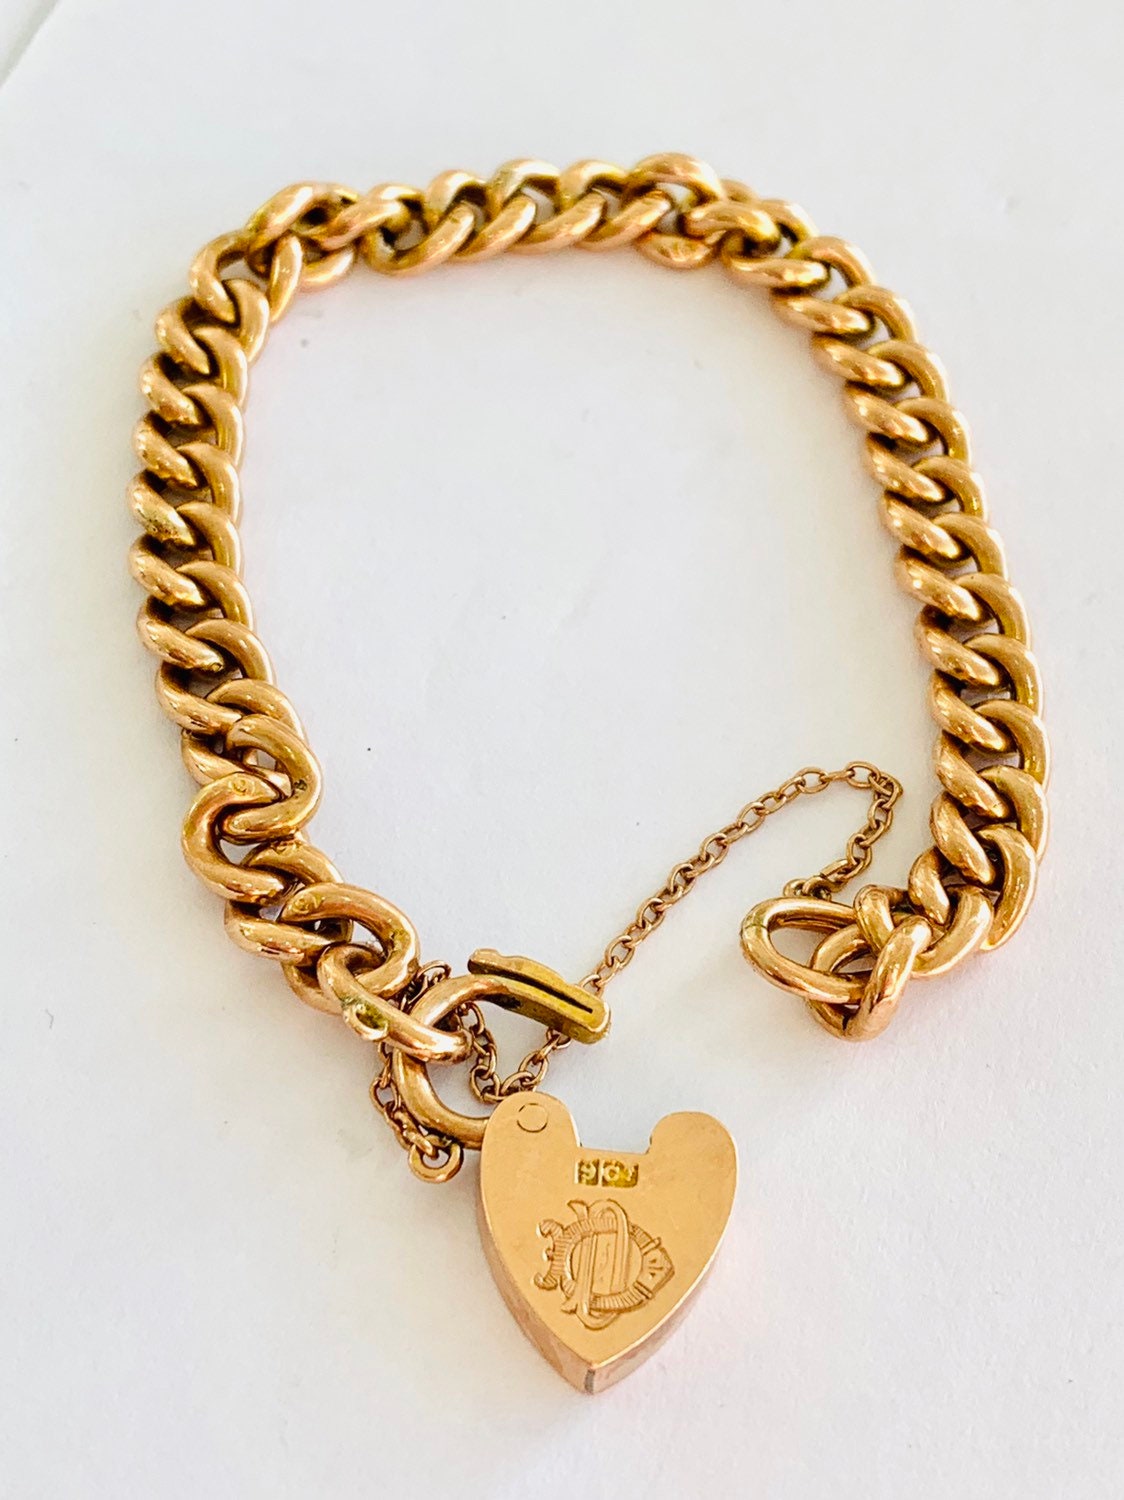 Superb antique Edwardian 9ct rose gold 7 inch charm bracelet with ...